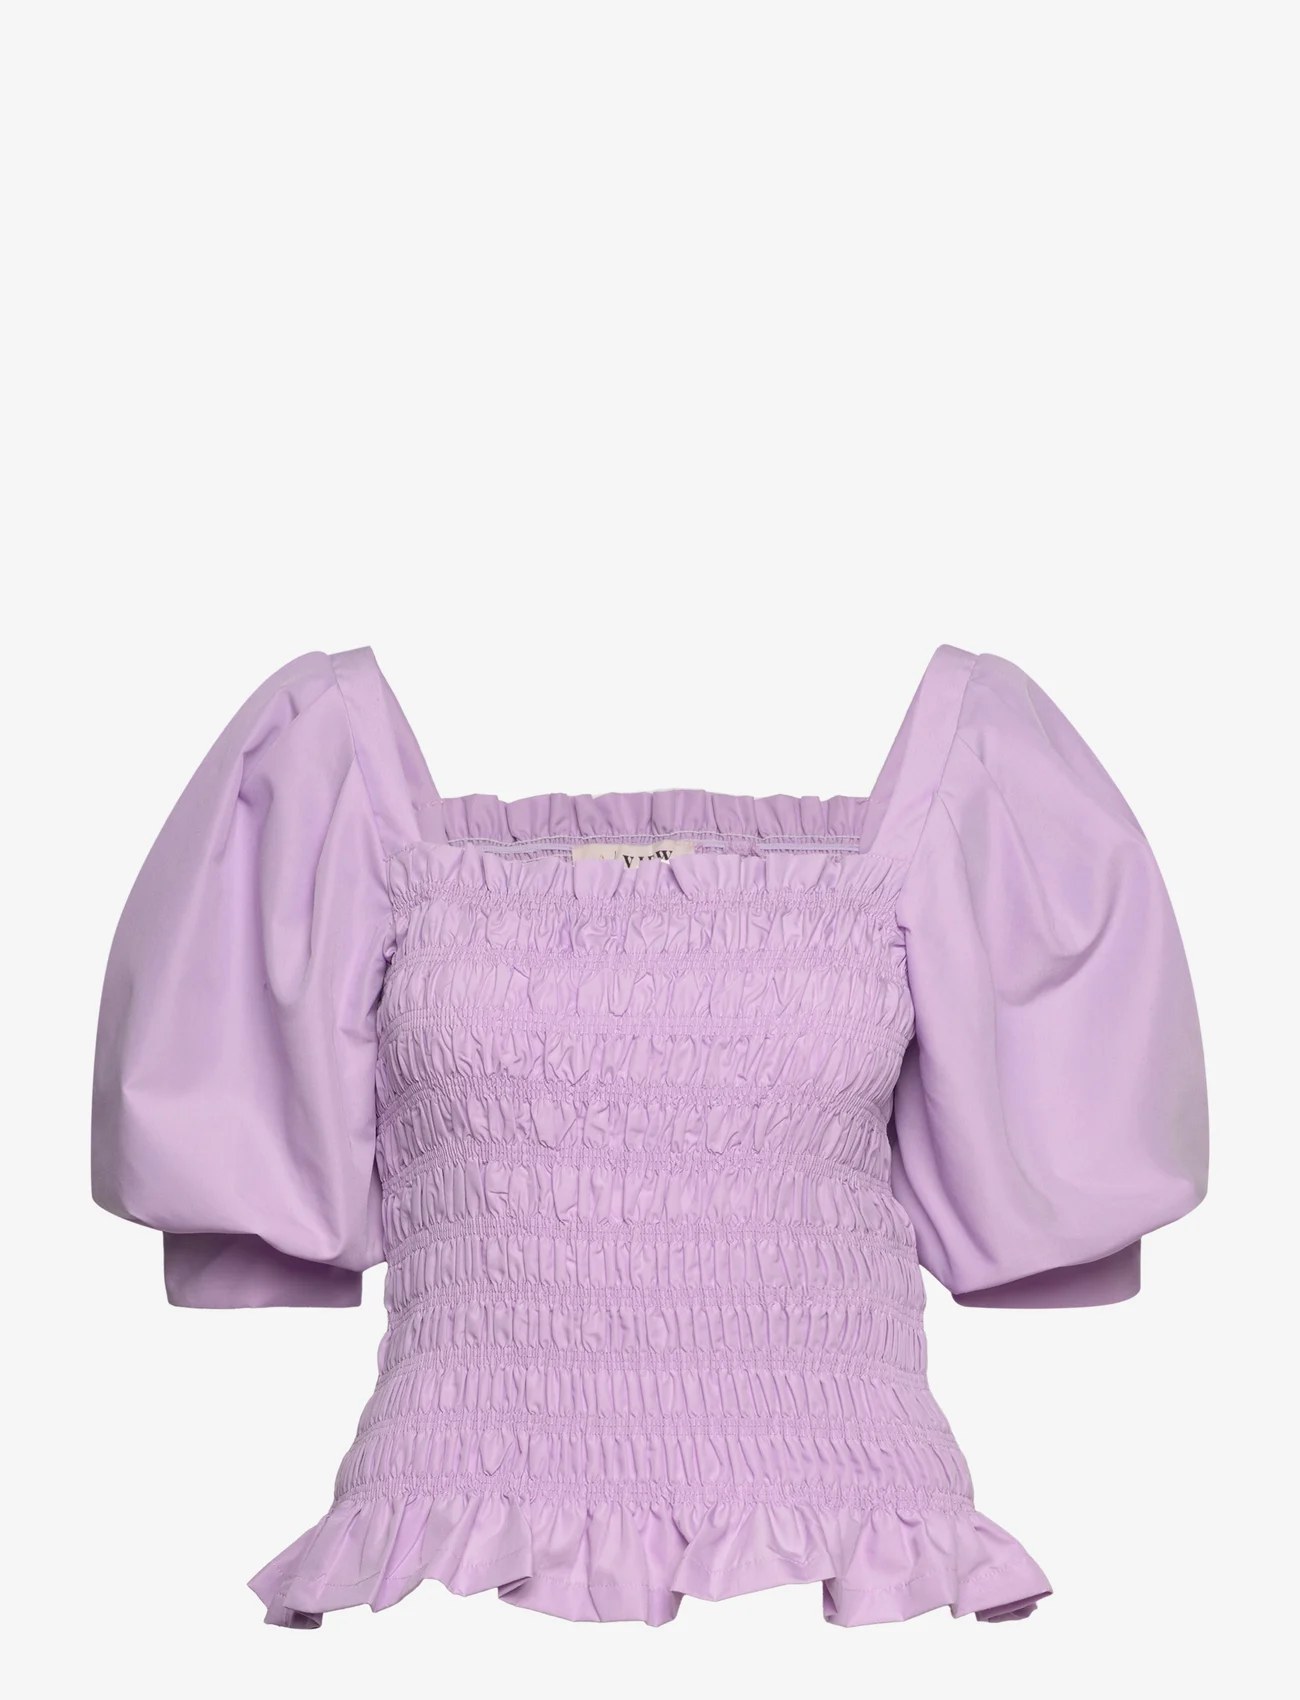 A-View - Rikka top - blouses korte mouwen - purple - 0